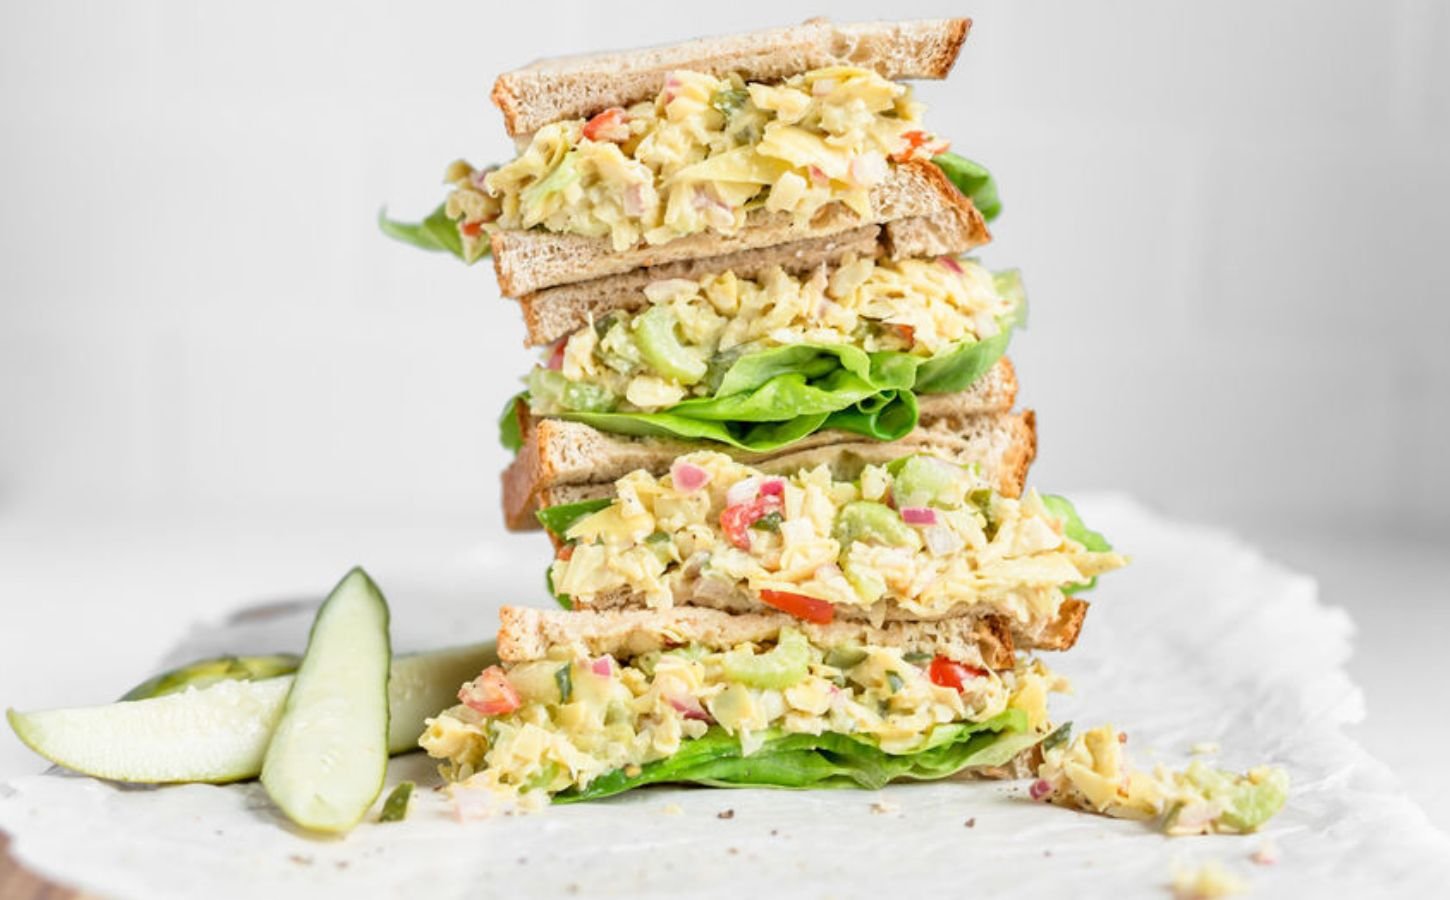 A vegan tuna salad sandwich featuring artichoke as a substitute for fish